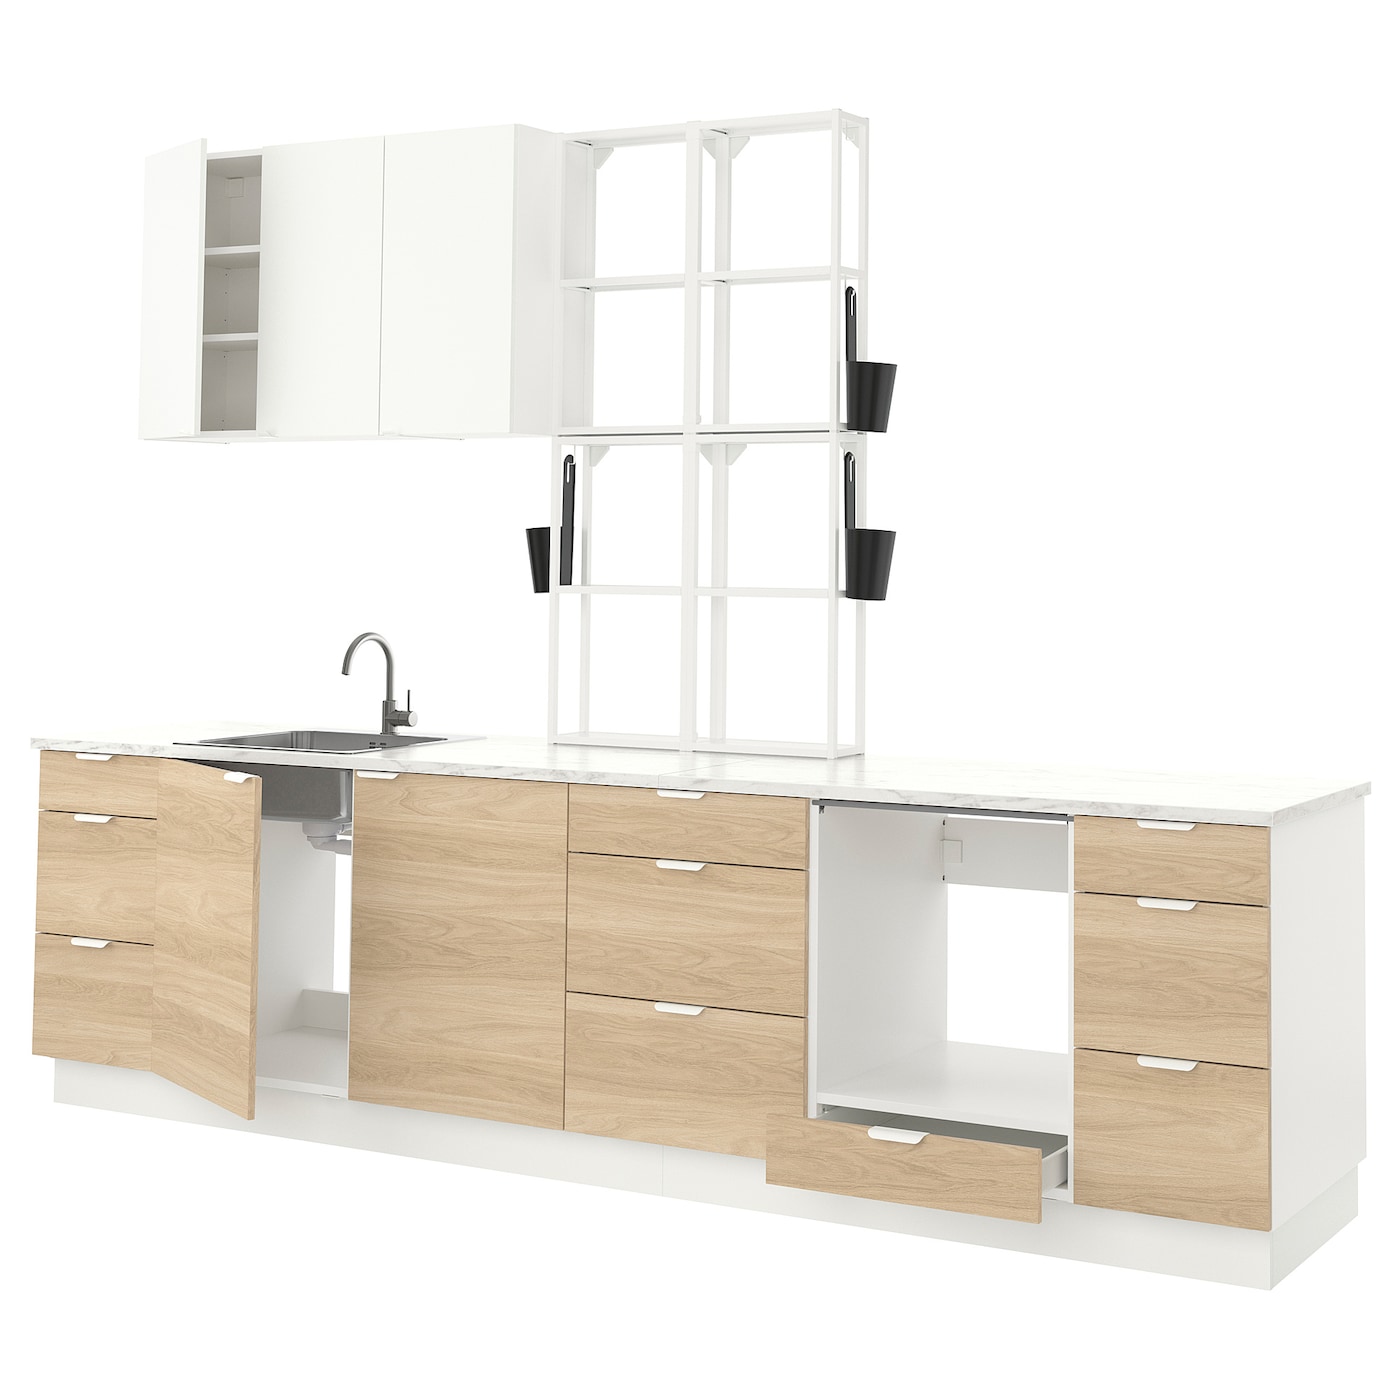 Комбинация для кухонного хранения  - ENHET  IKEA/ ЭНХЕТ ИКЕА, 323х63,5х241 см, белый/бежевый